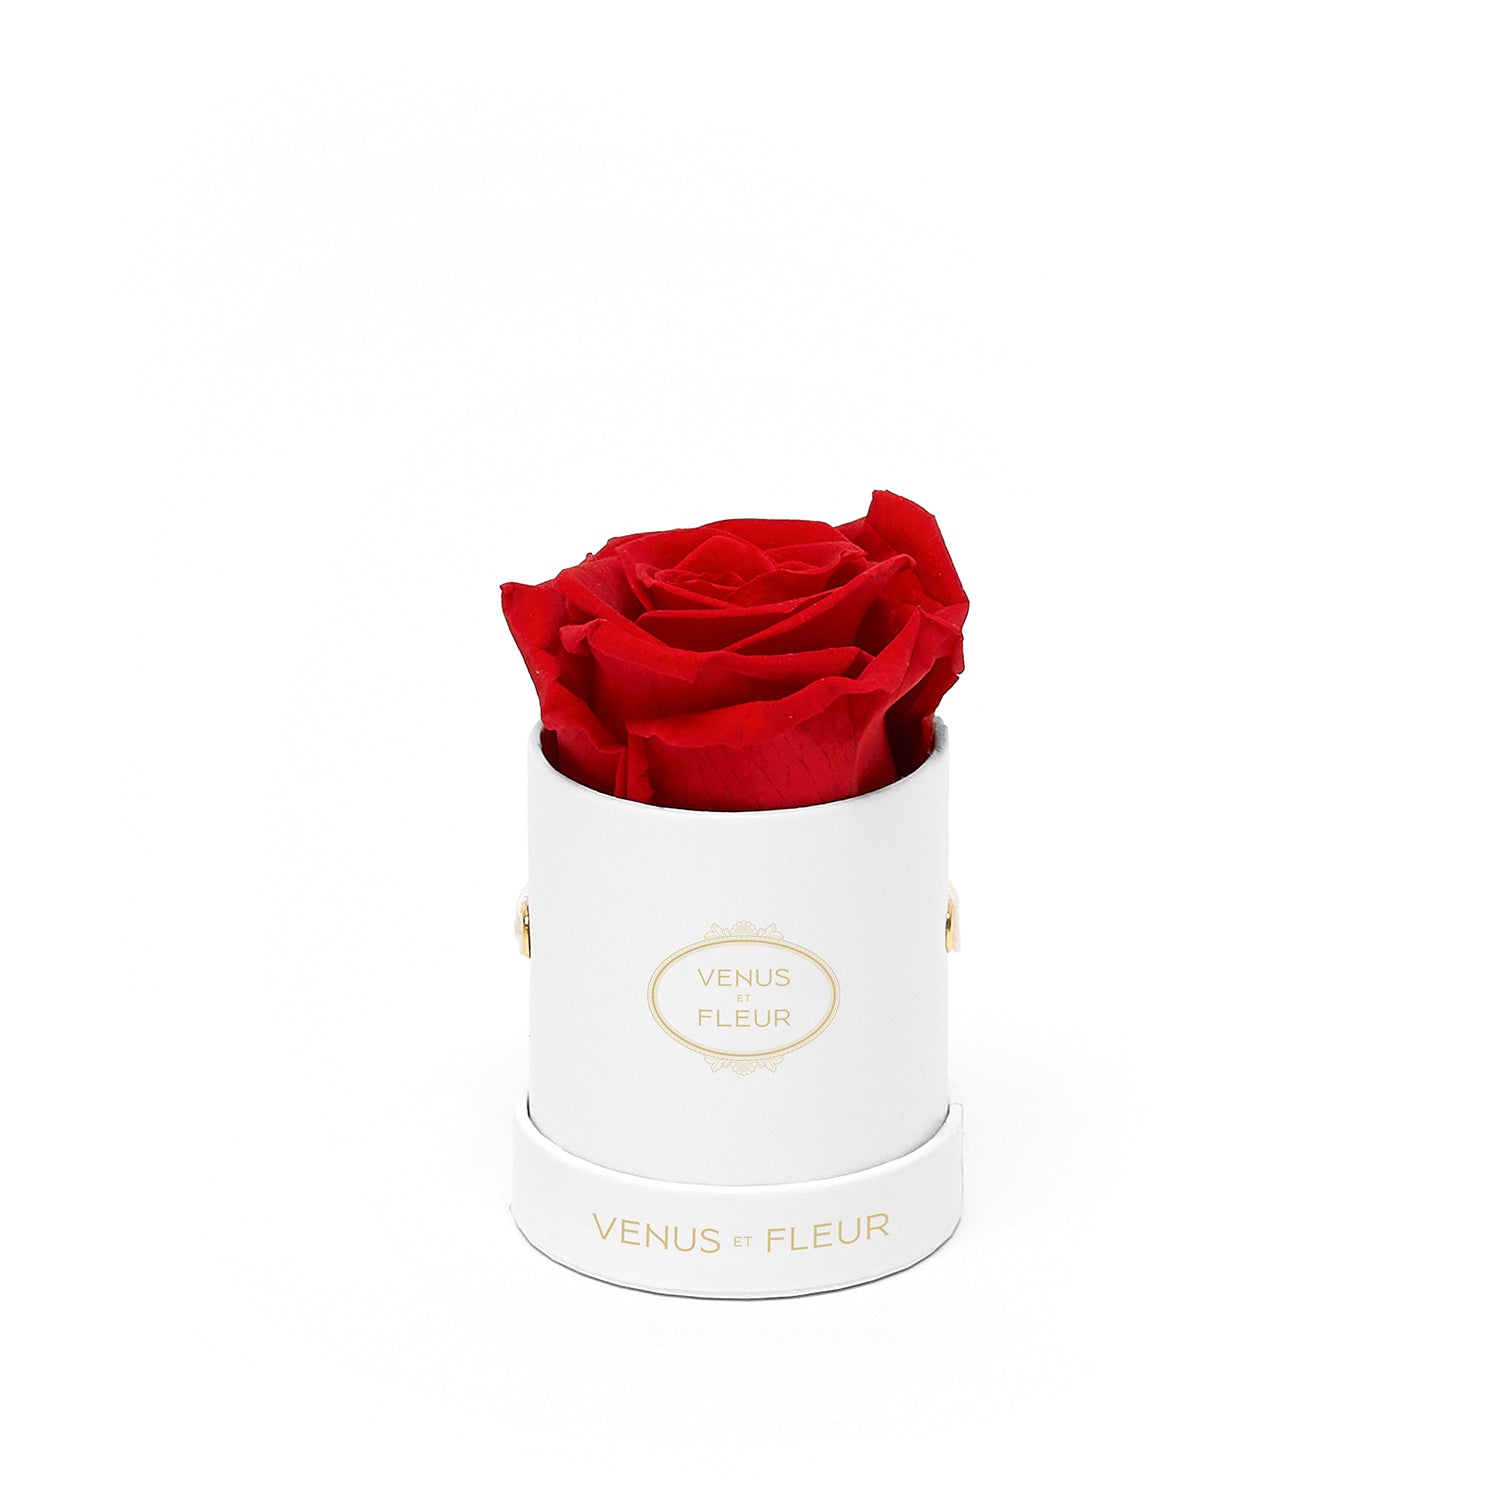 Respuesta a @Laurely isambert #parati #rosaseternas, Eternal Roses  Materials